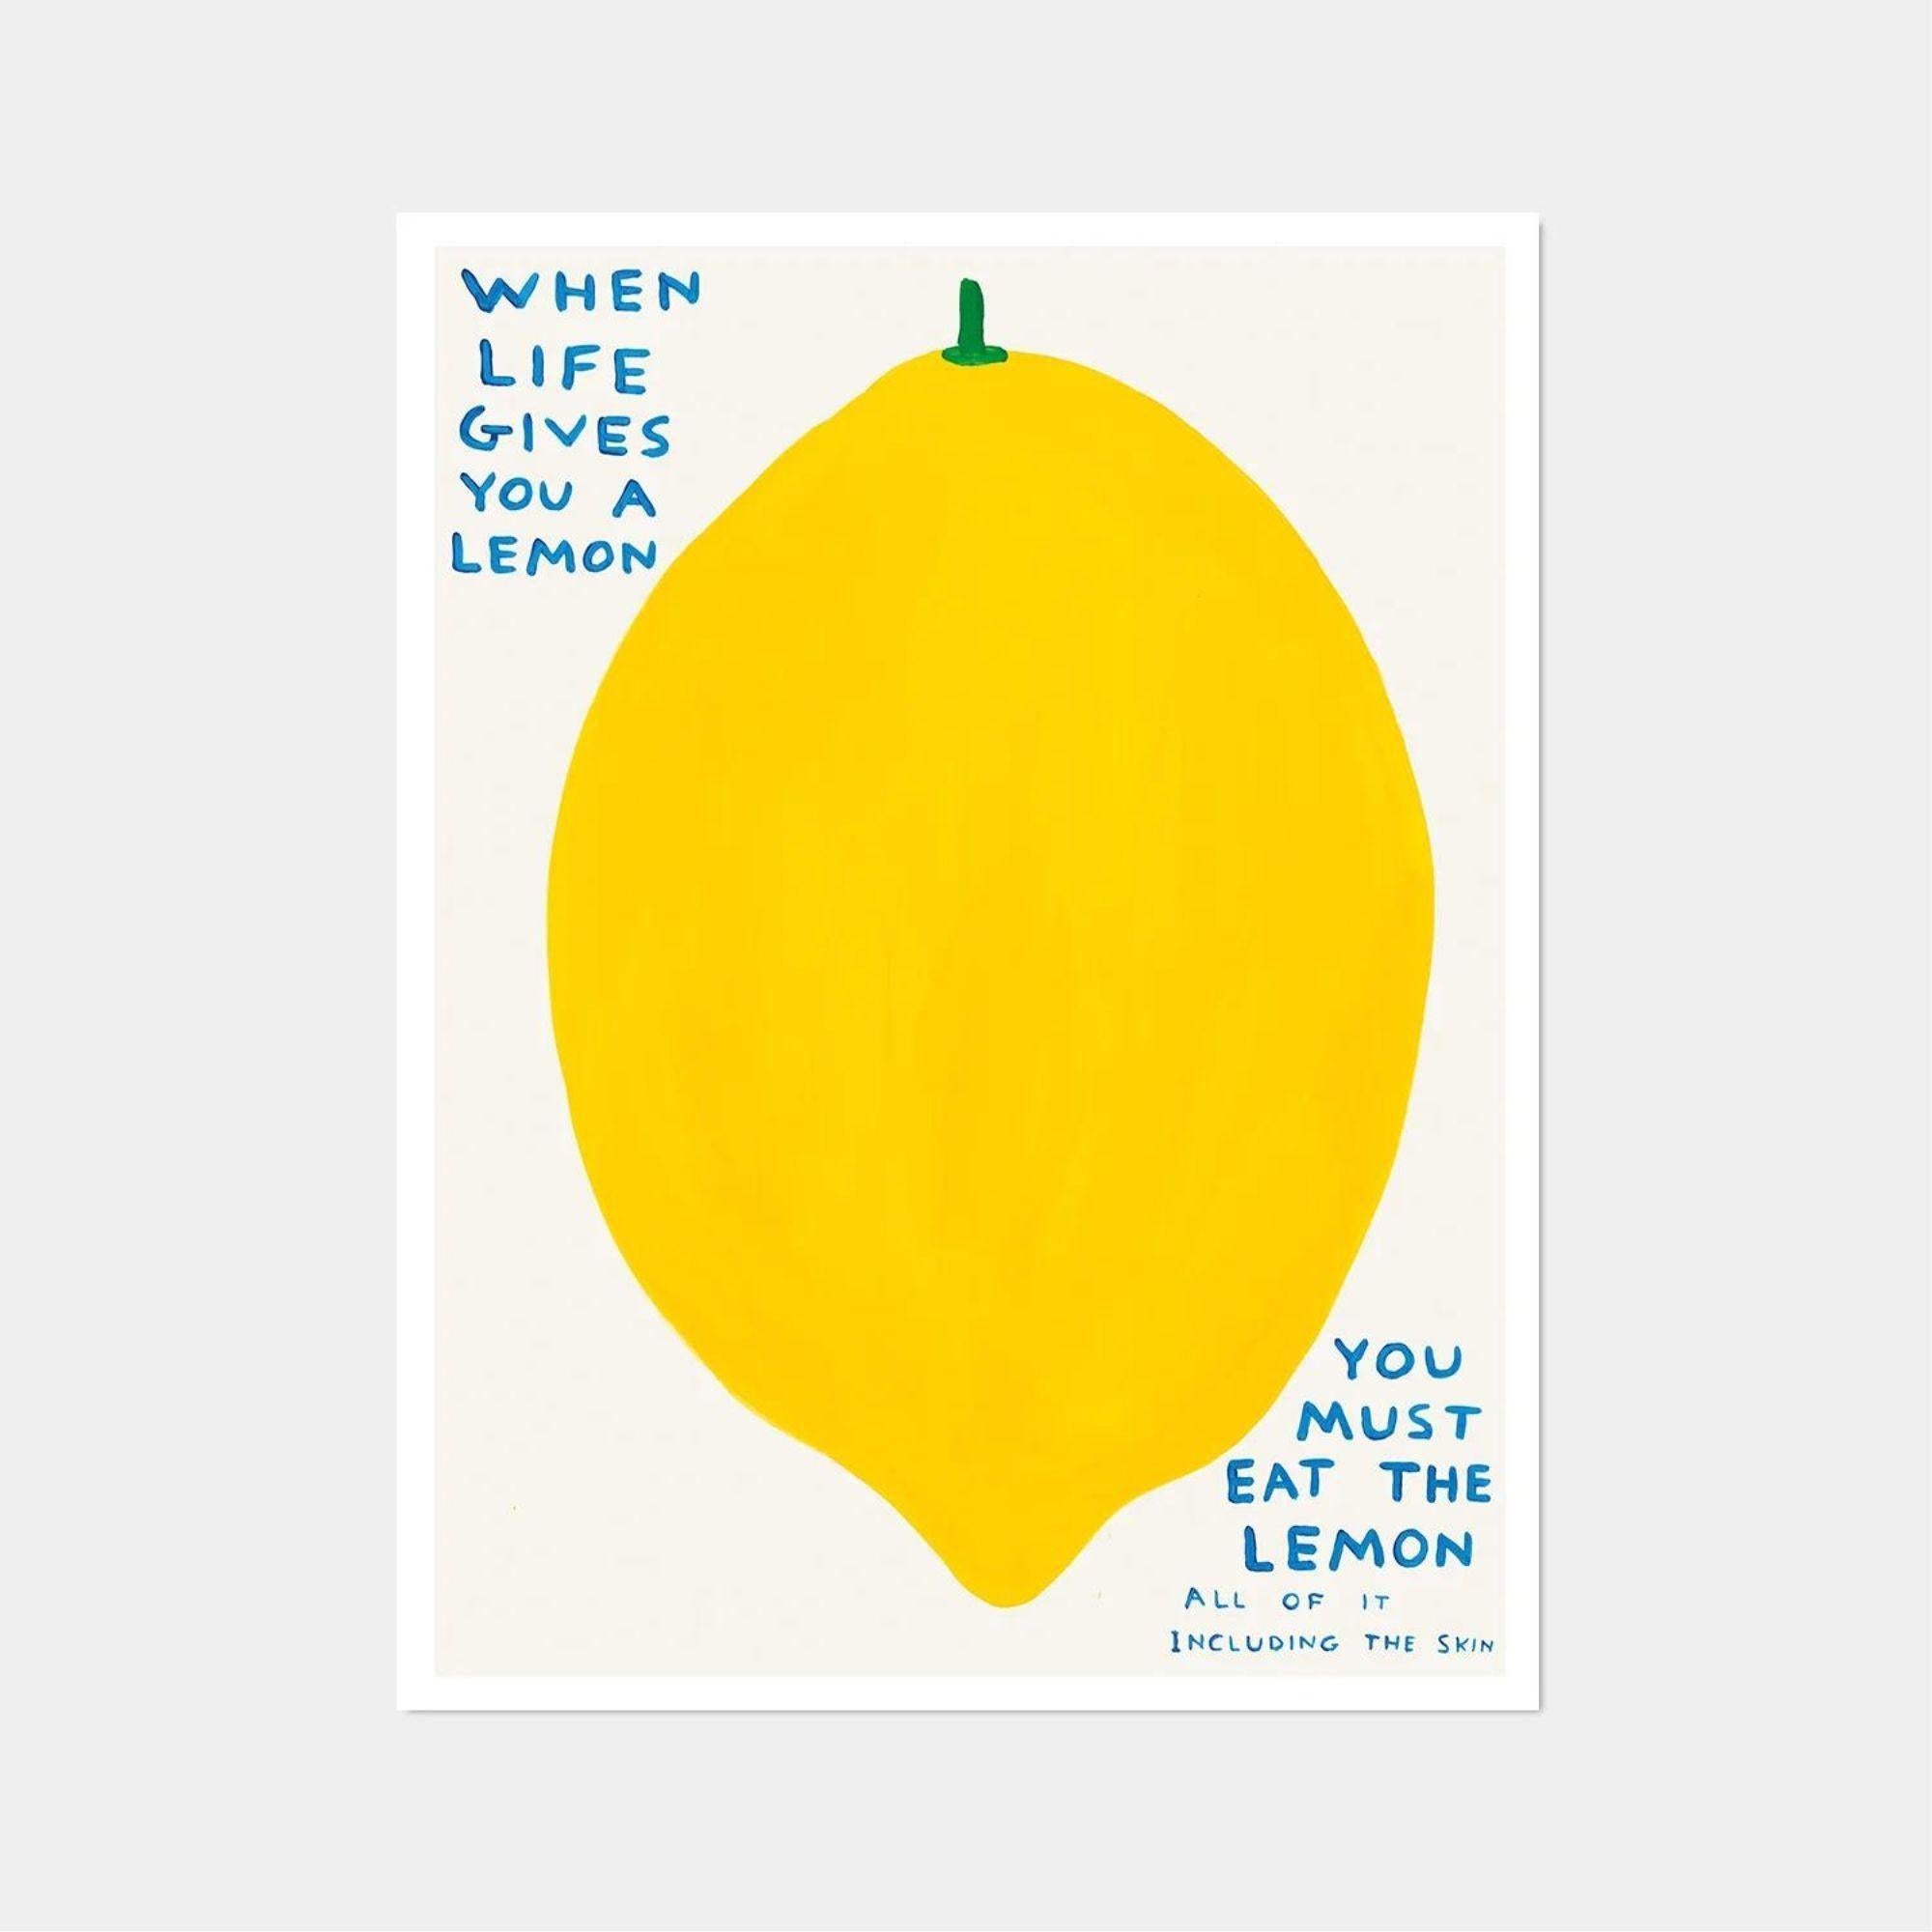 David Shrigley, When Life Gives You A Lemon, 2021

60 x 80 cm

Off-set lithography

Printed on 200g Munken Lynx paper

Narayana Press in Denmark